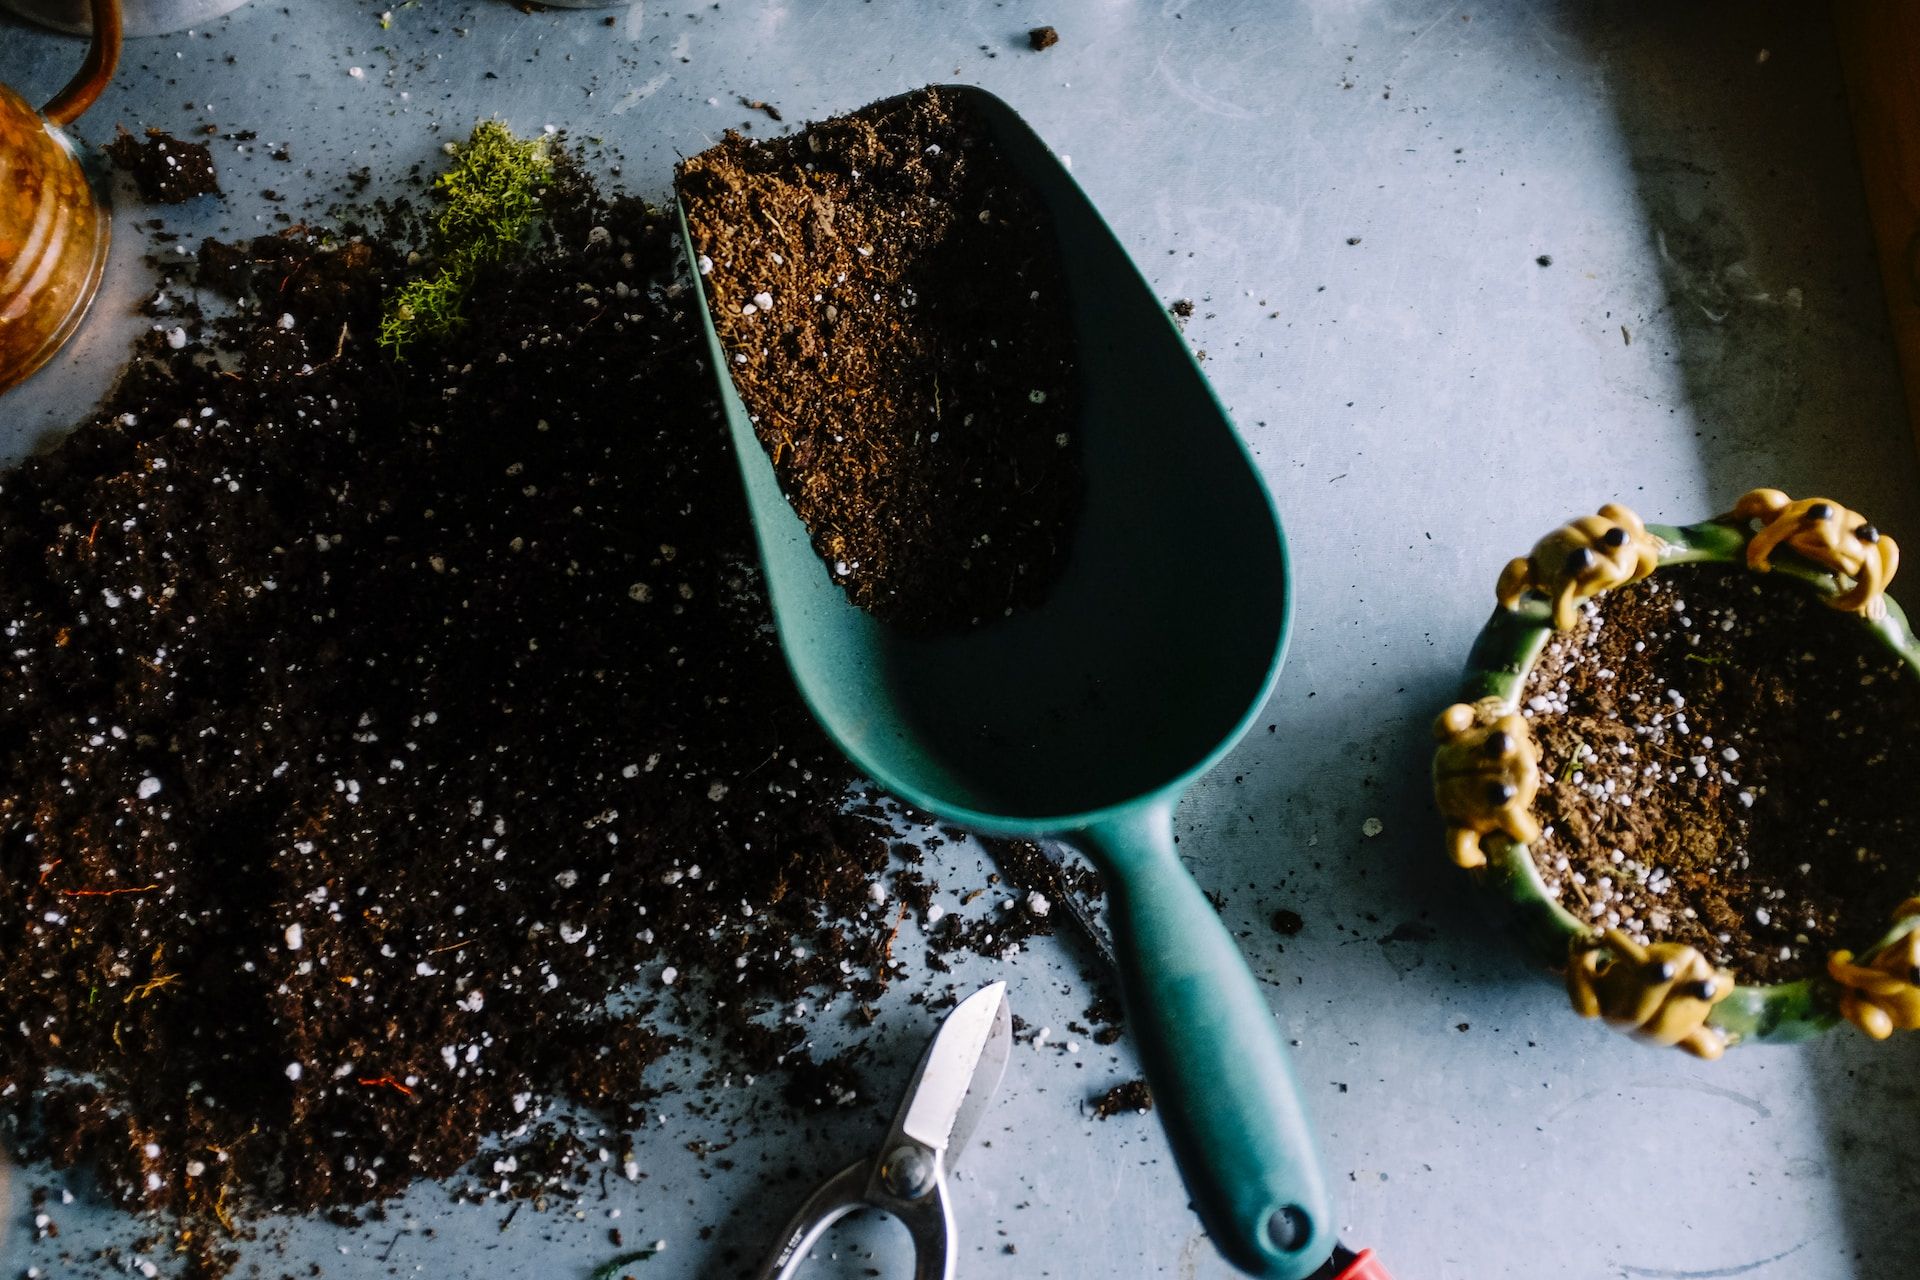 Metal garden shovel filled with soil. Image from Unsplash.